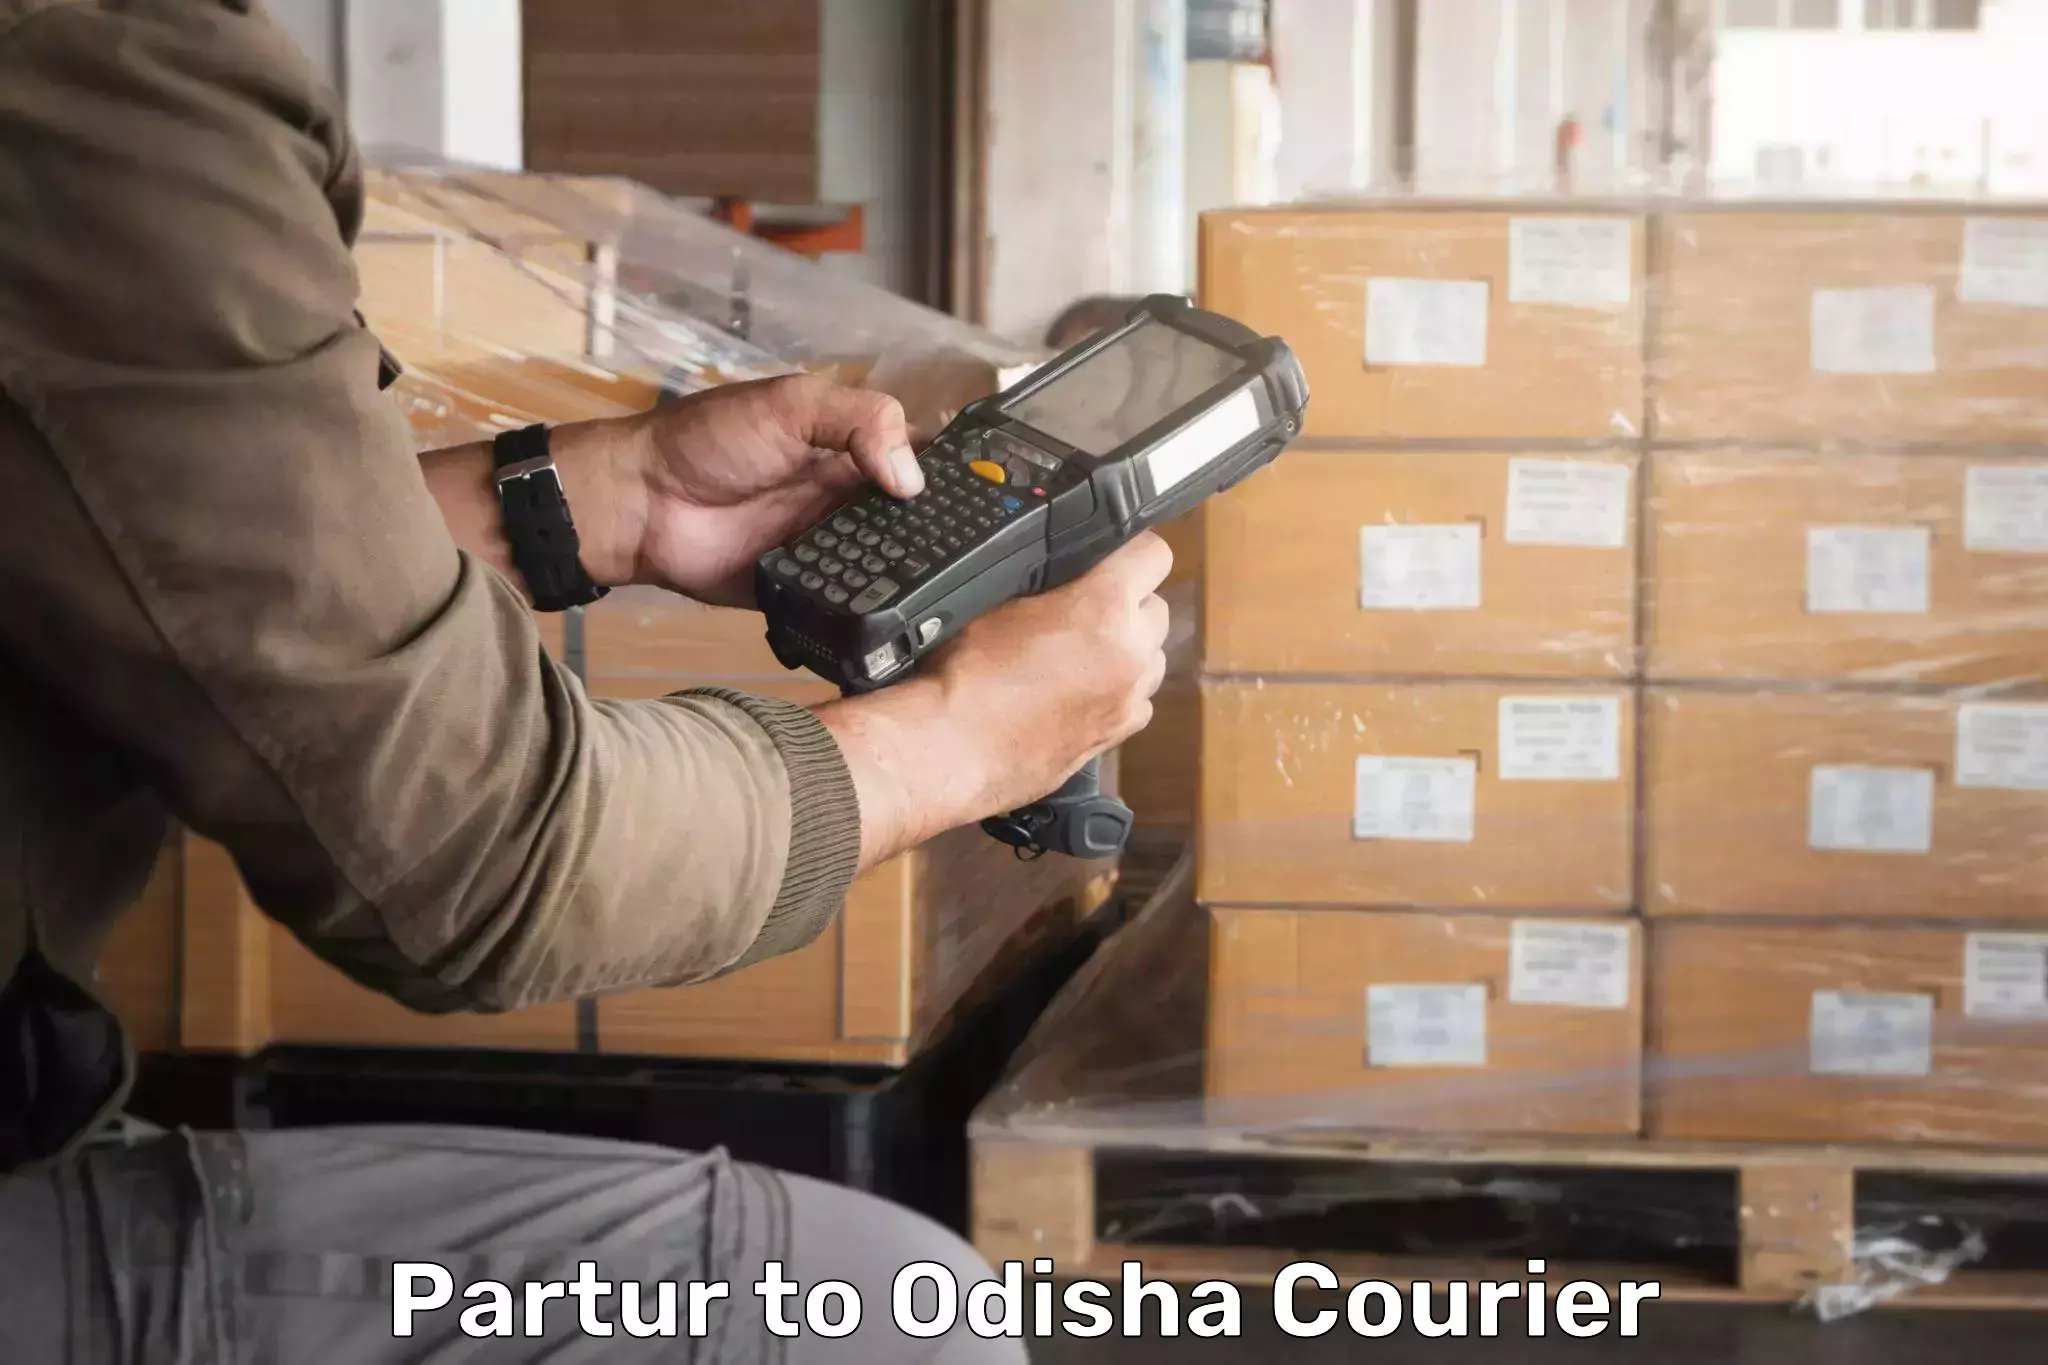 Courier service partnerships Partur to Dhamanagar